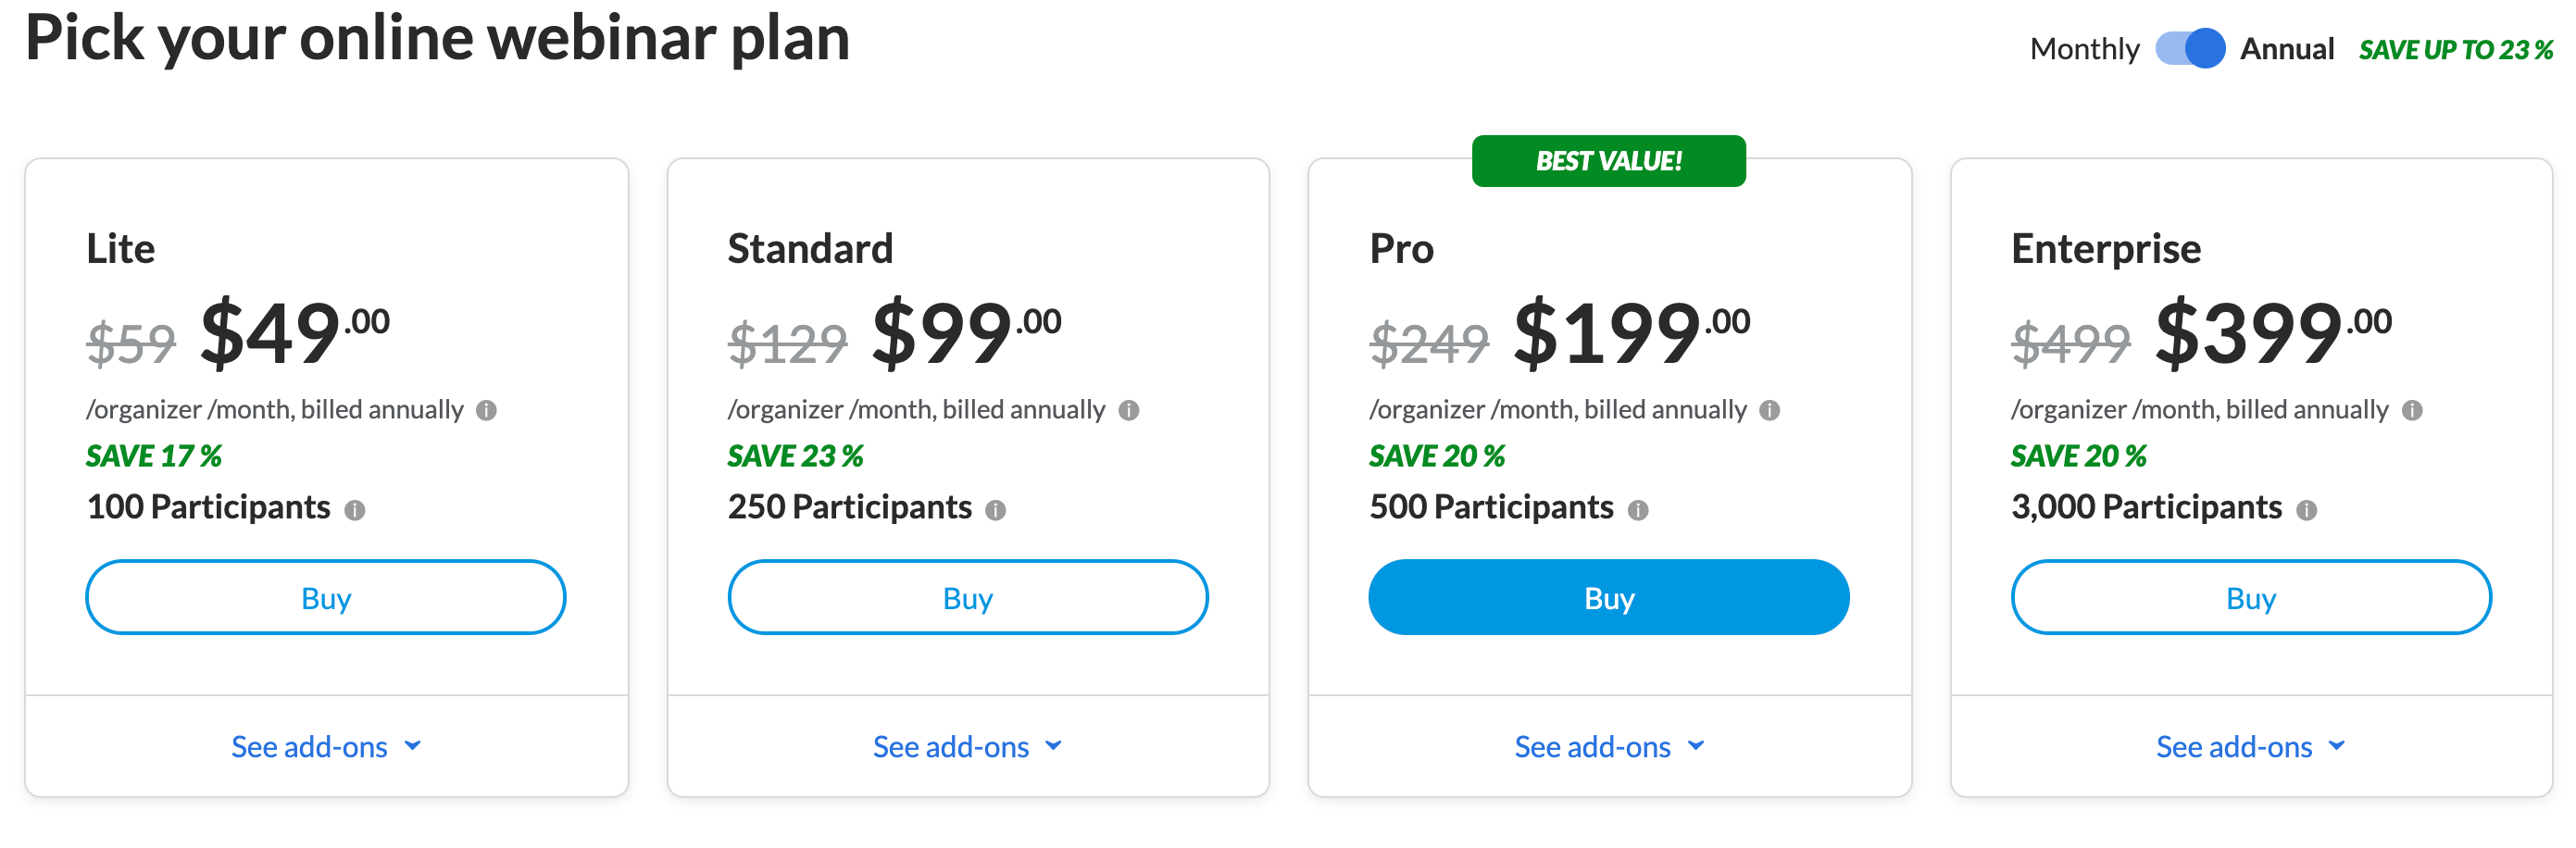 GoToWebinar Pricing Plans Discount Offer